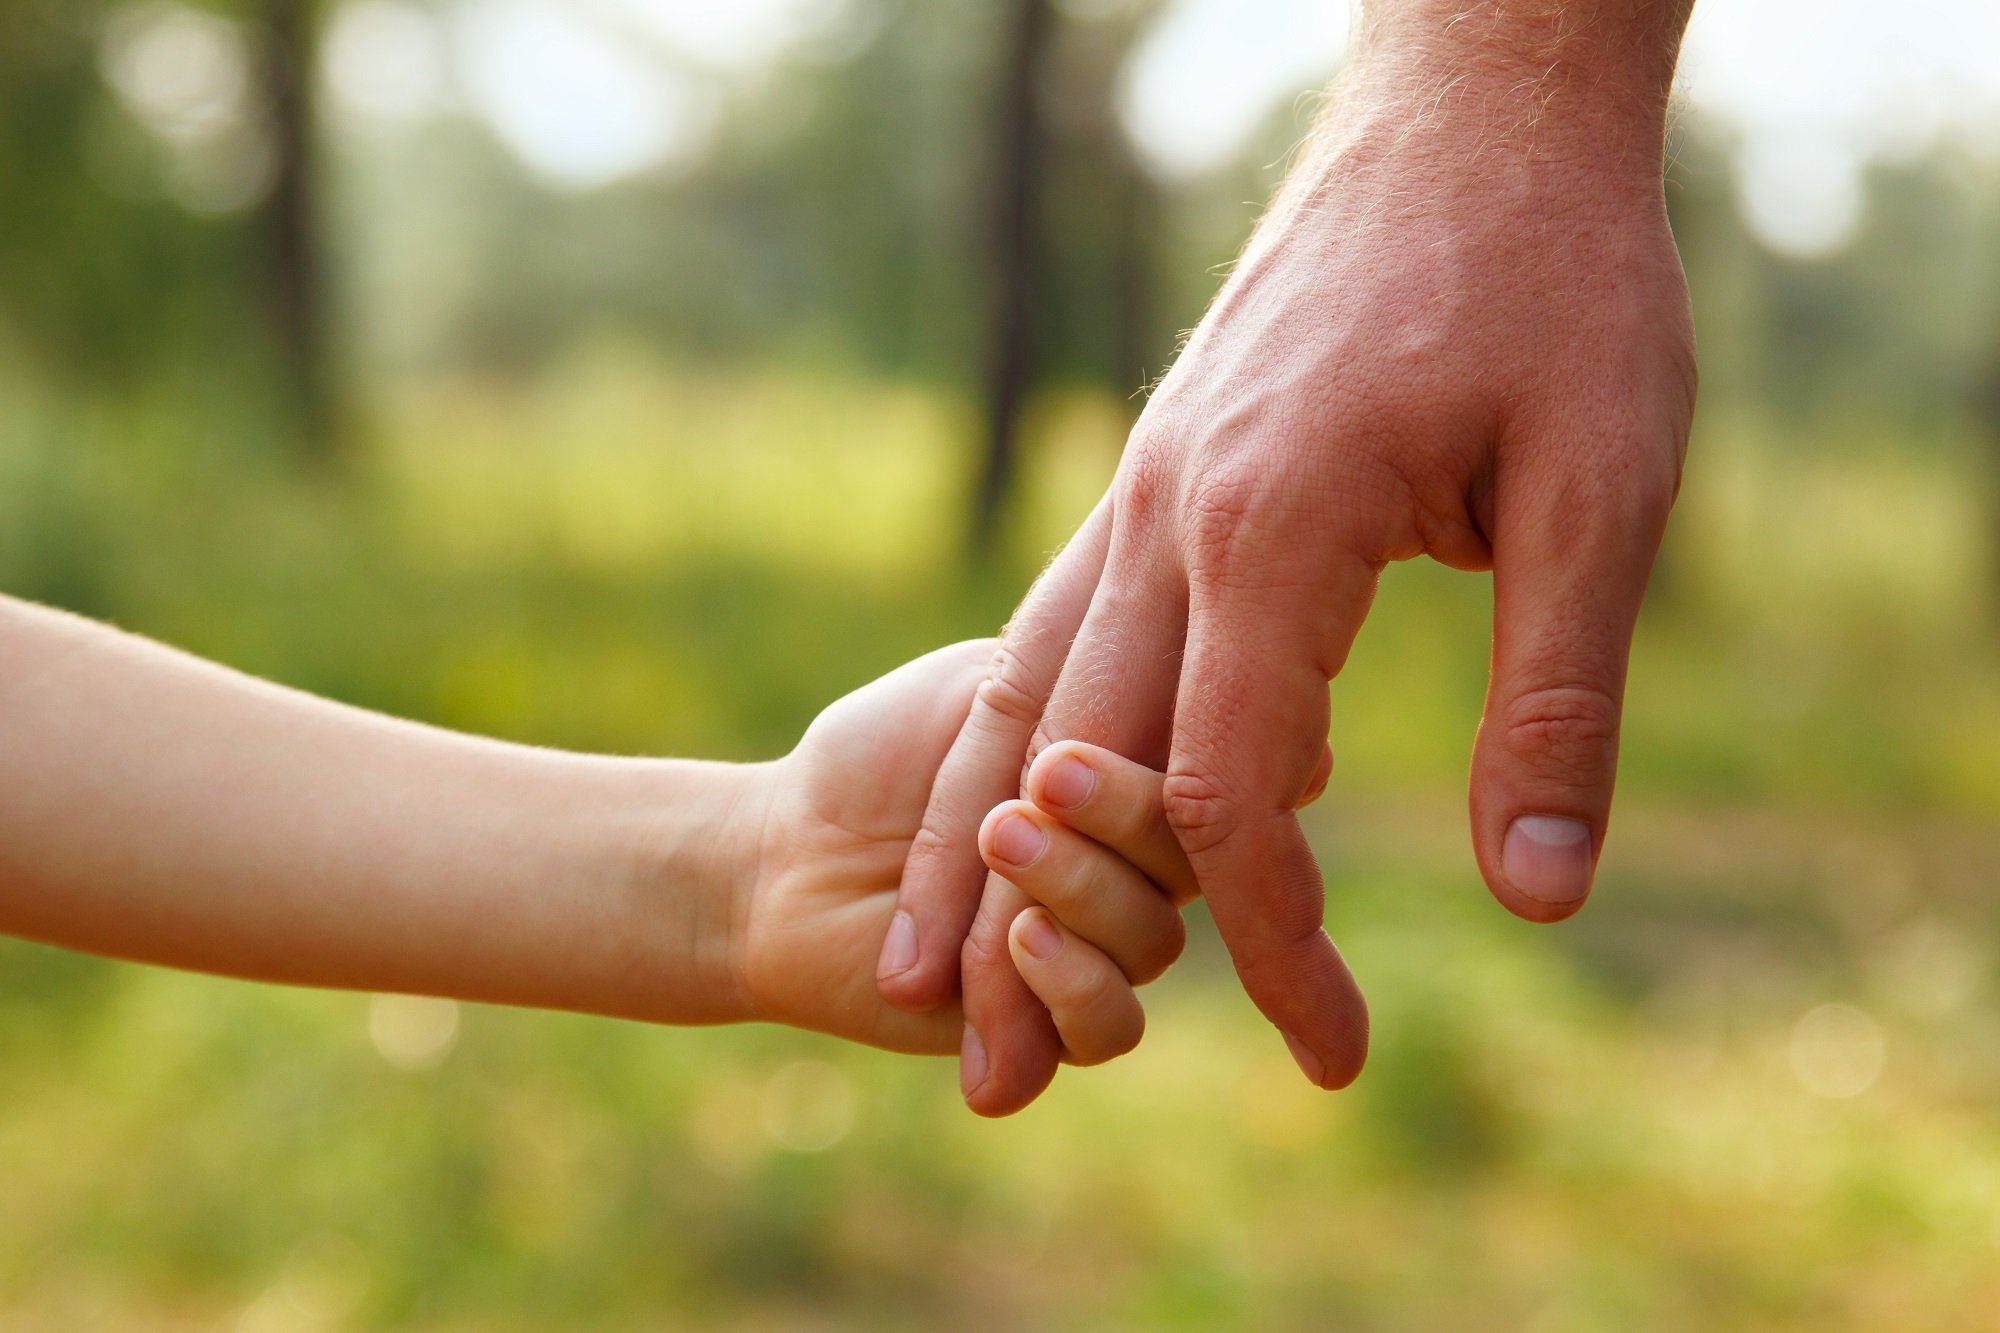 Padre sostiene la mano de su hijo. | Foto: Shutterstock